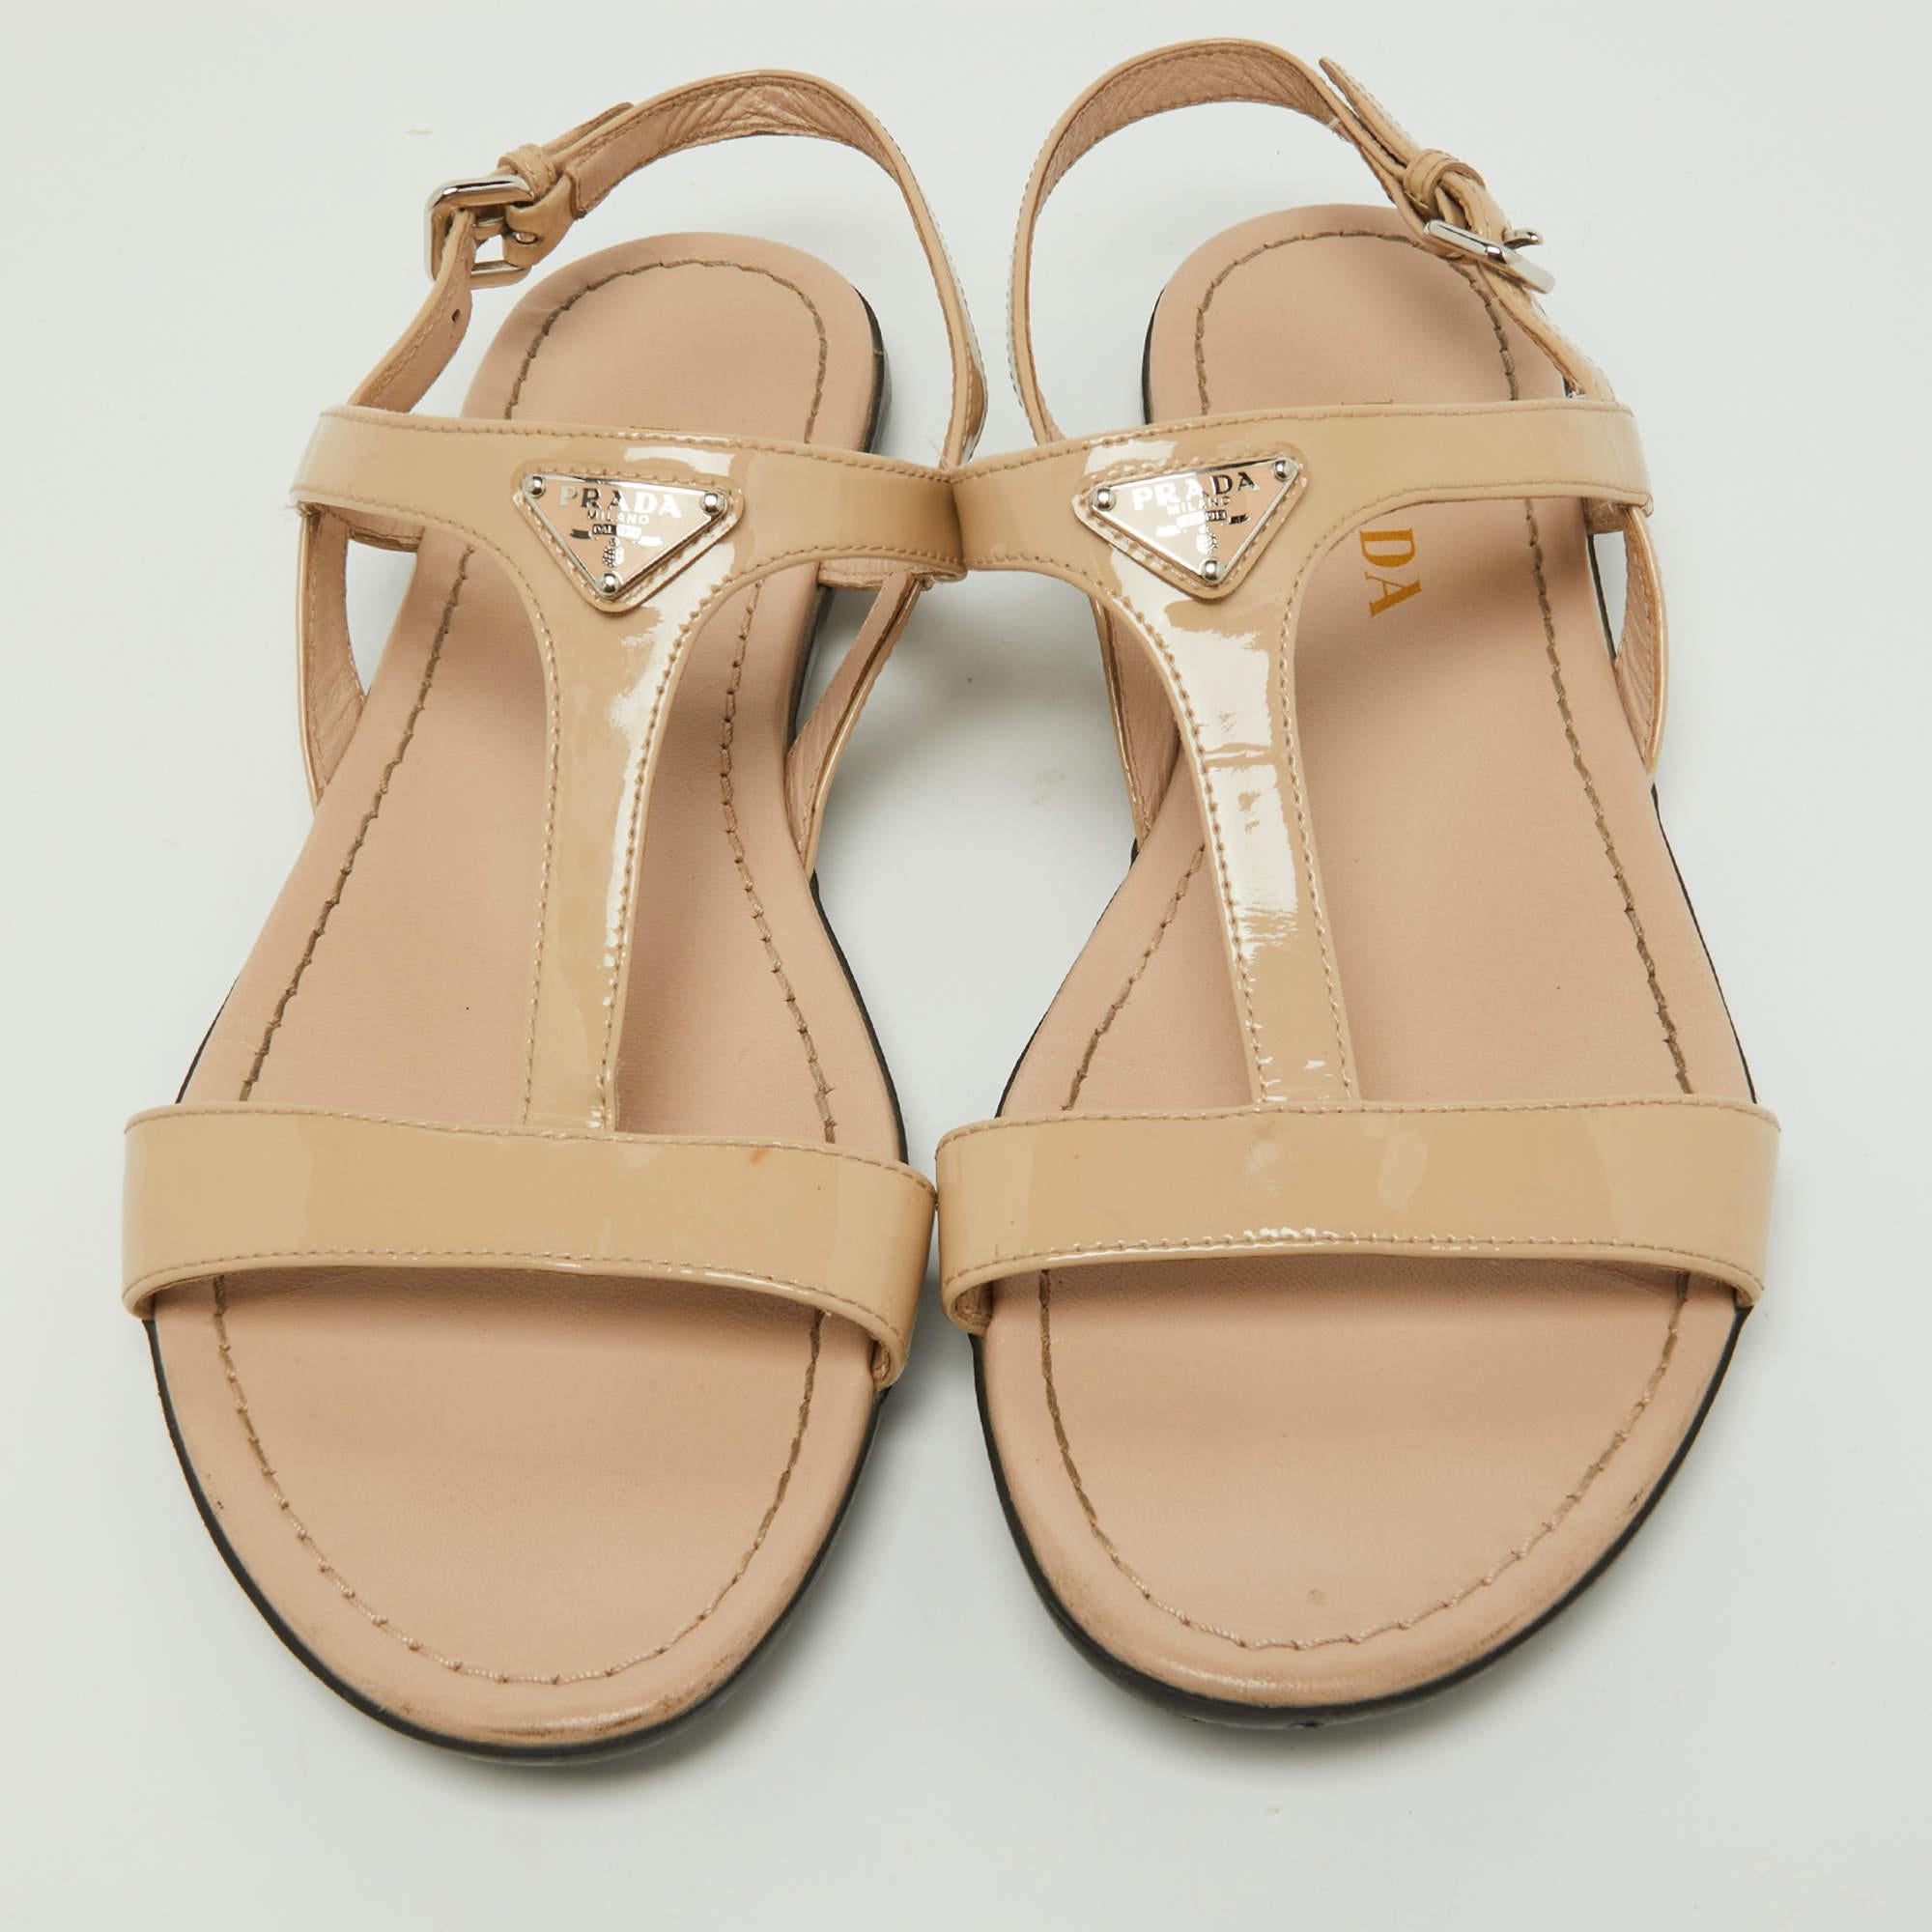 Women's Prada Beige Patent Leather Flat Sandals Size 39